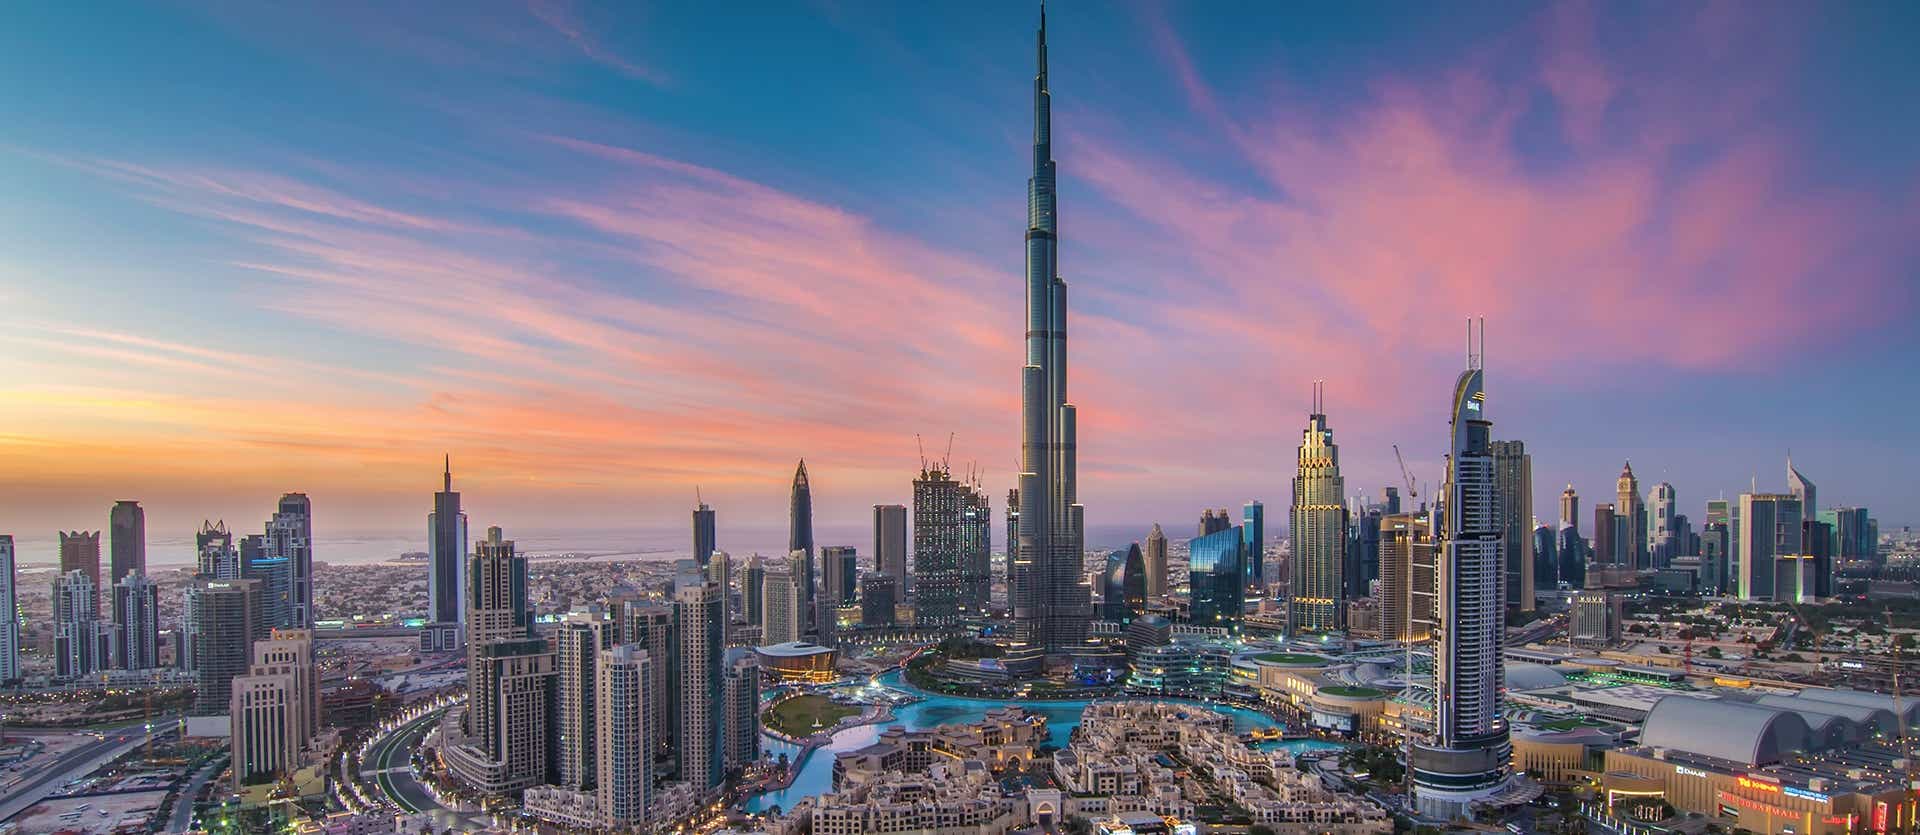 Skyline de Dubái <span class="iconos separador"></span> Emiratos Árabes Unidos